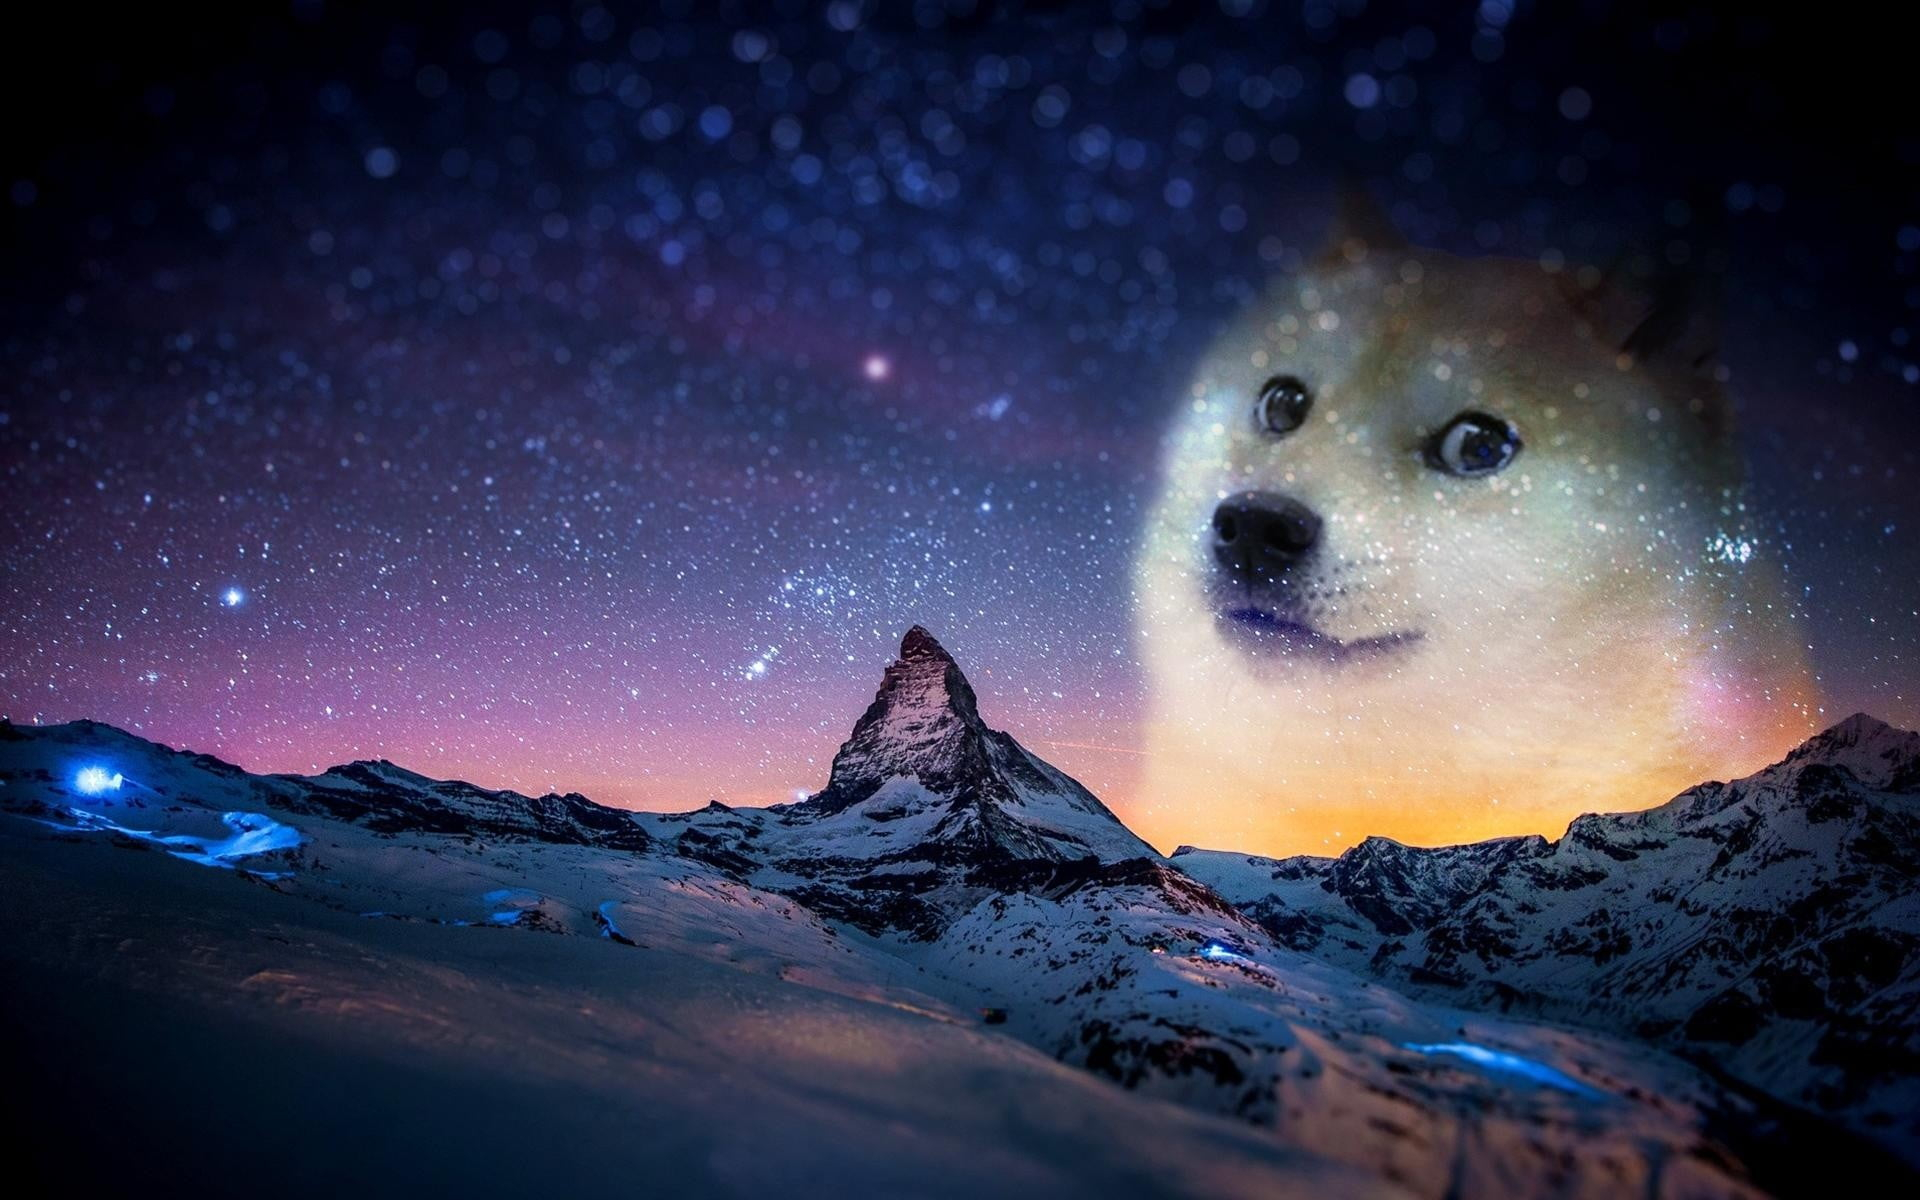 Short-coated white dog, snow, night, animals, doge, memes, humor wallpaper